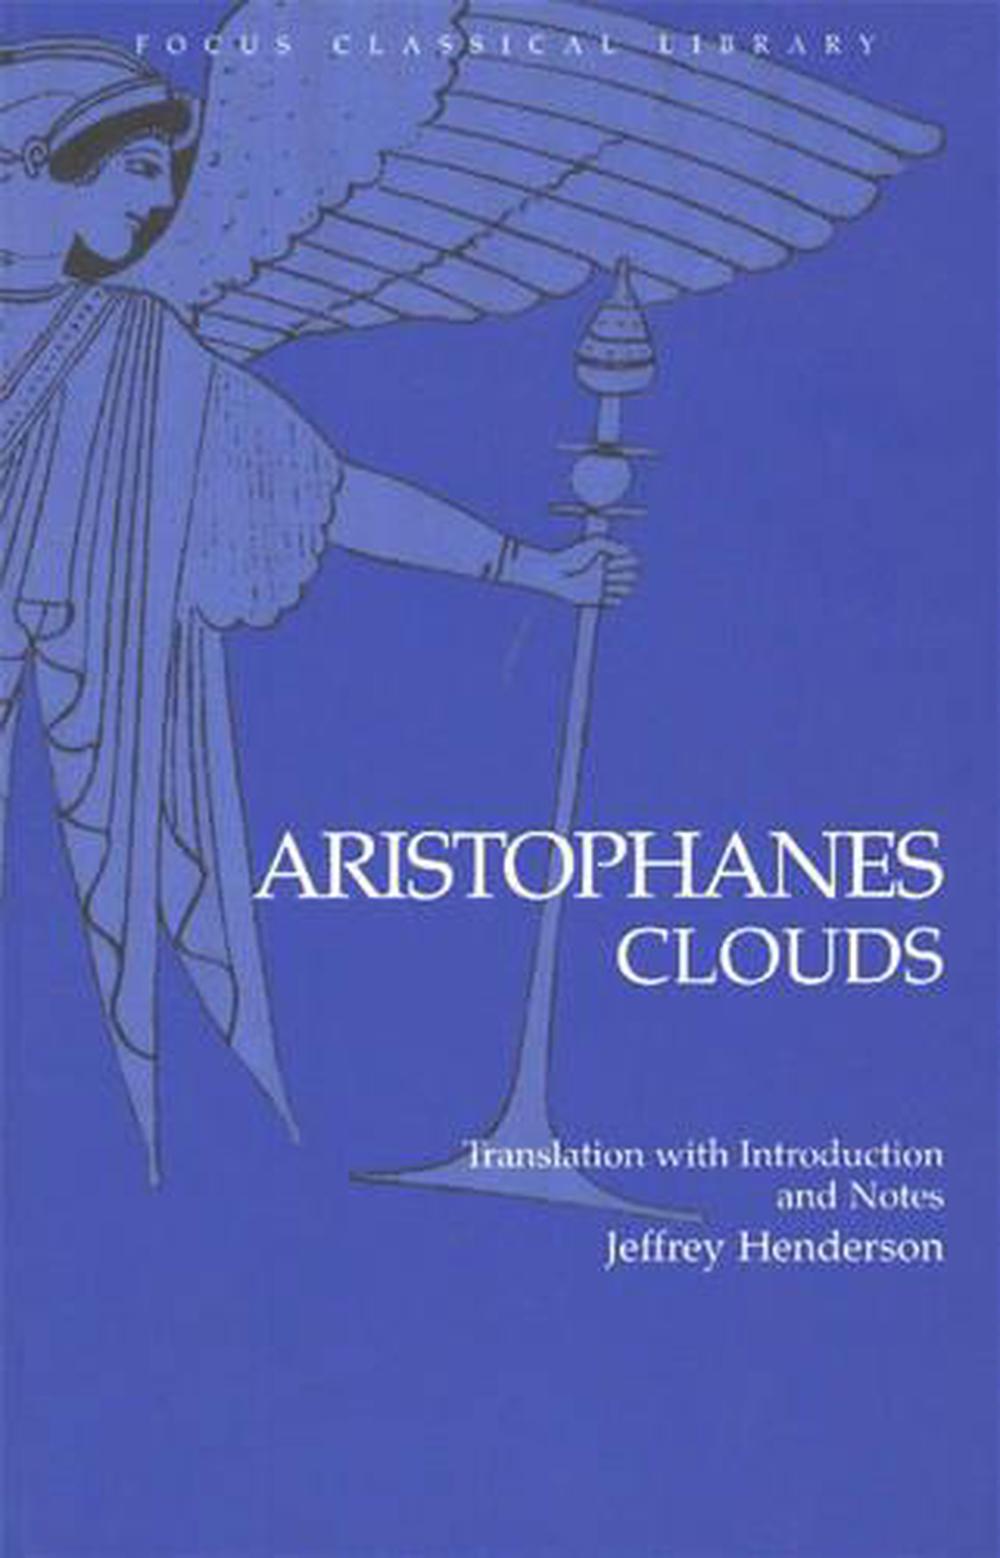 Aristophanes by John Claughton